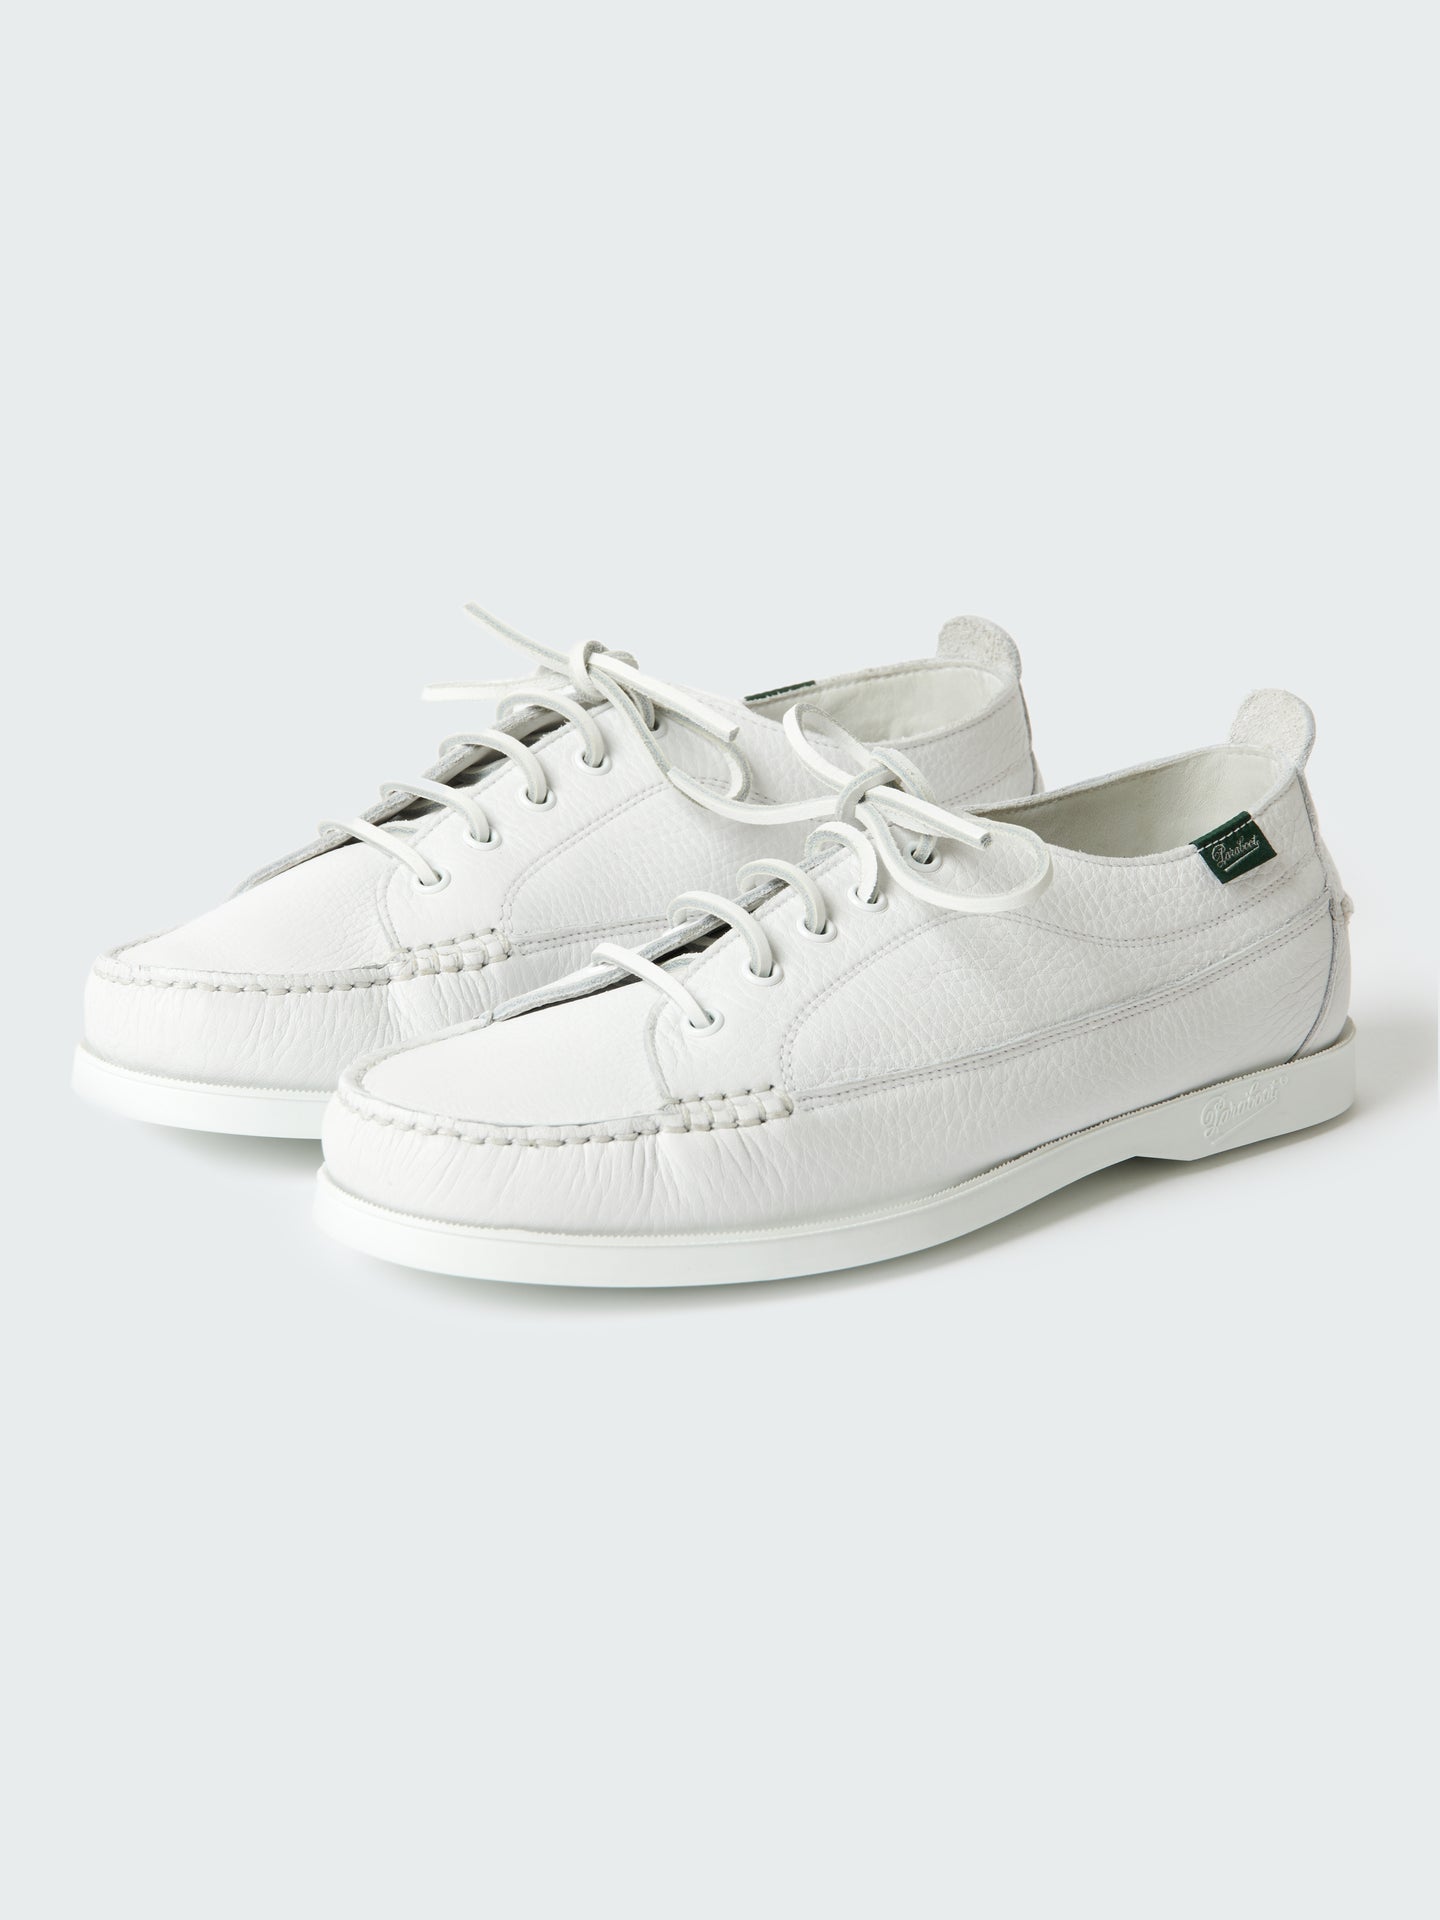 SN x Paraboot Malibu Shoe in Pure White